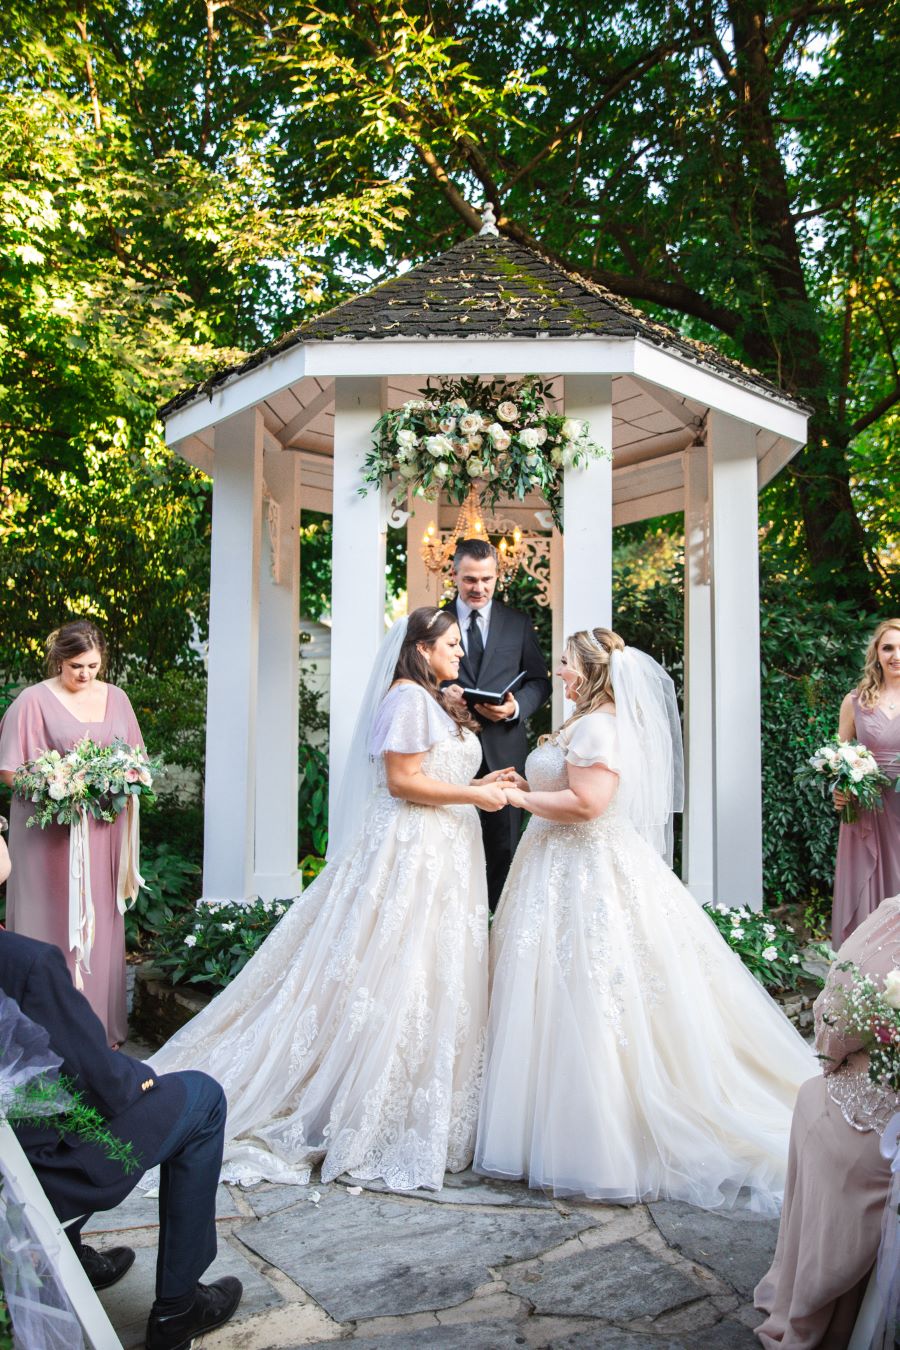 Brides holding hands in front of gazebo of garden wedding venue / Romantic / Summer / September / Pink / Dusty Rose / Cream